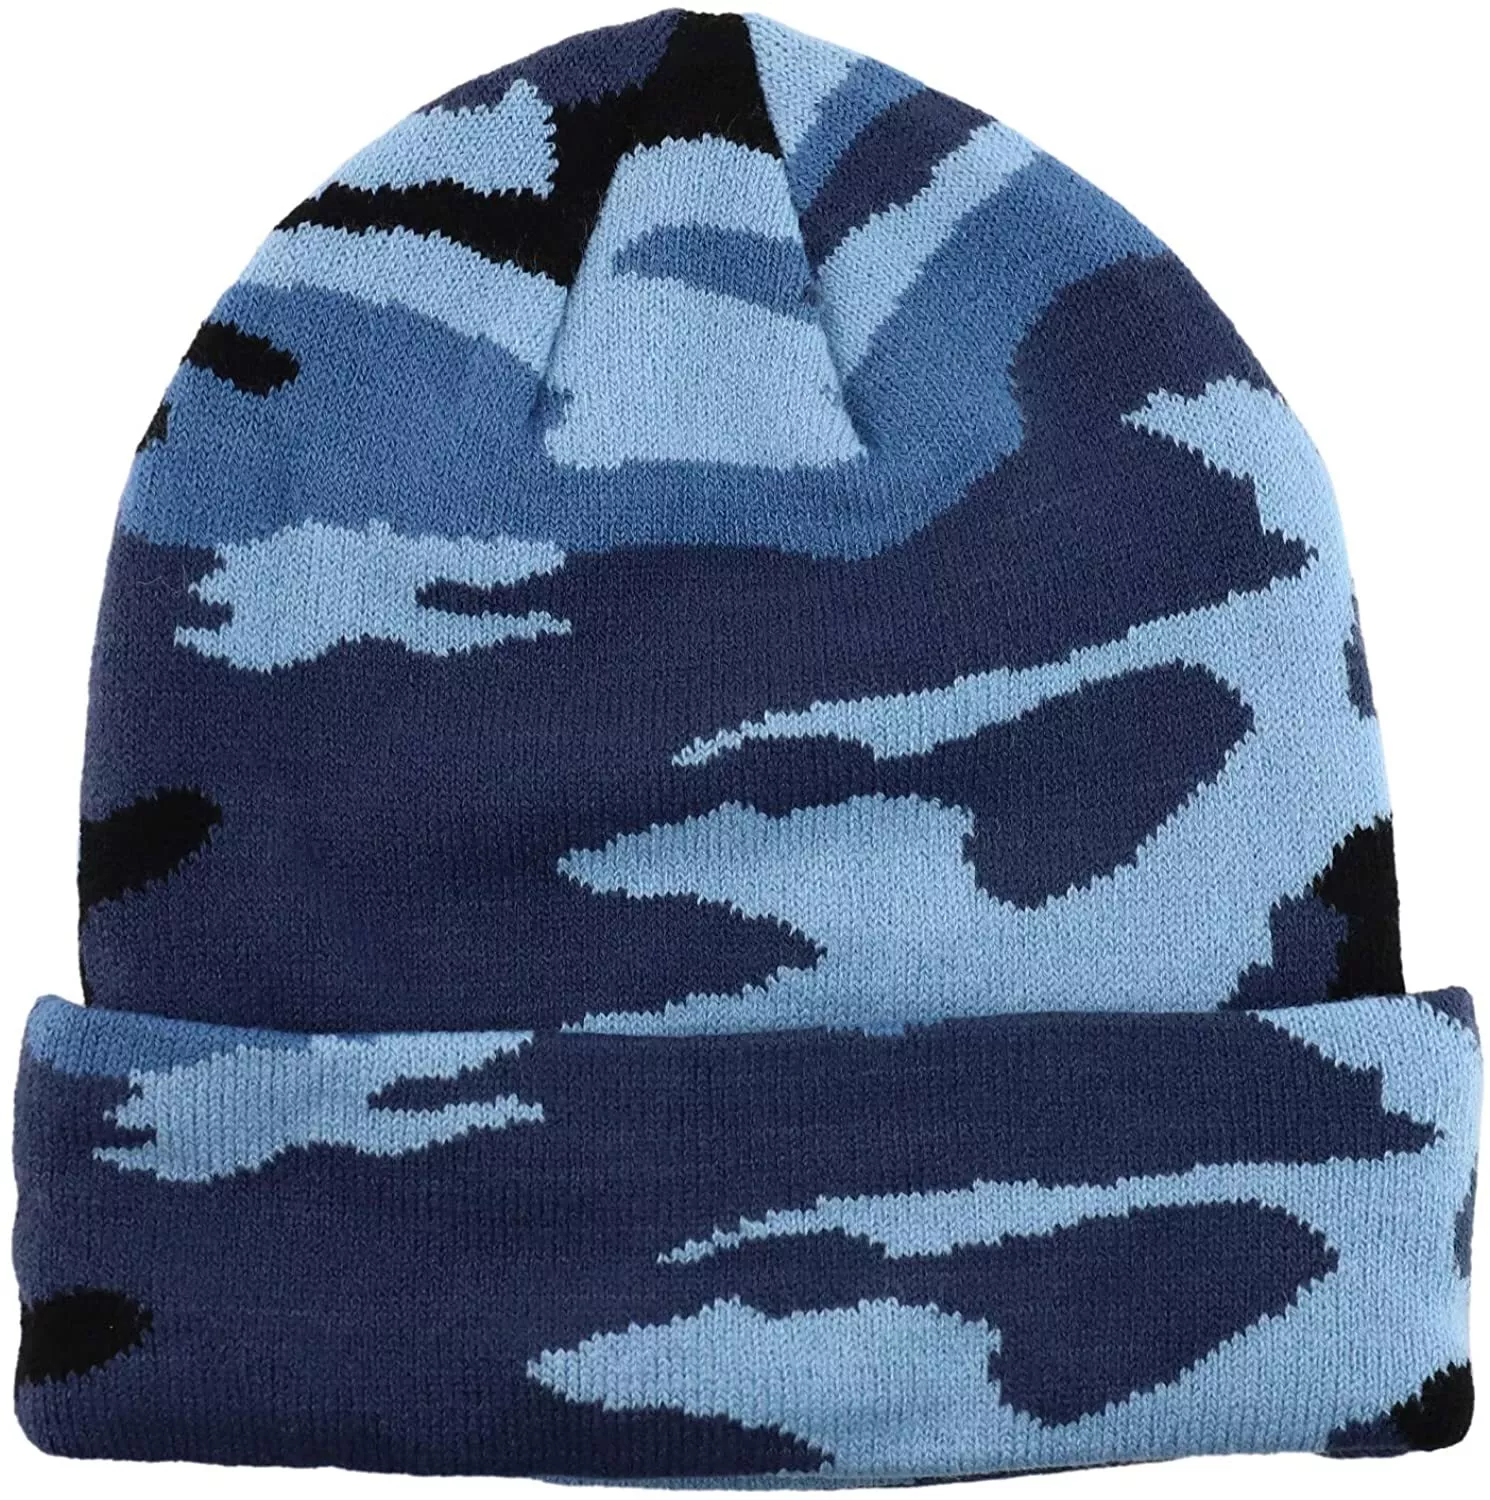 Unisex Plain Warm Knit Beanie Hat Cuff Skull Ski Cap Blue camo 1pcs - £7.85 GBP